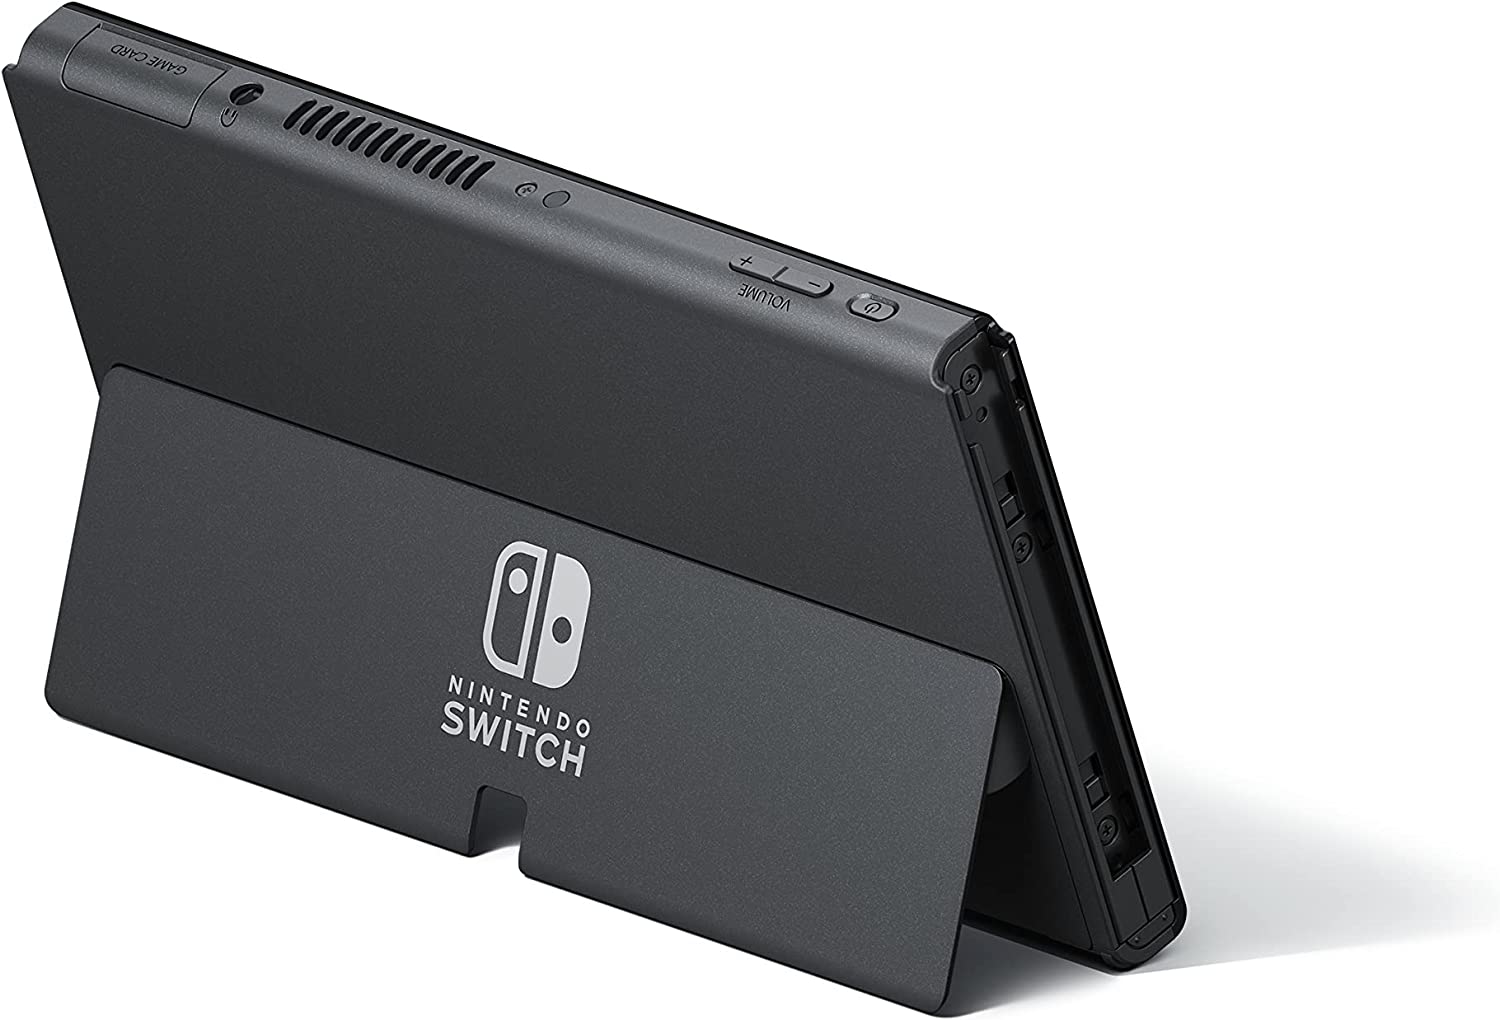 Soporte sobremesa Nintendo Switch modelo OLED